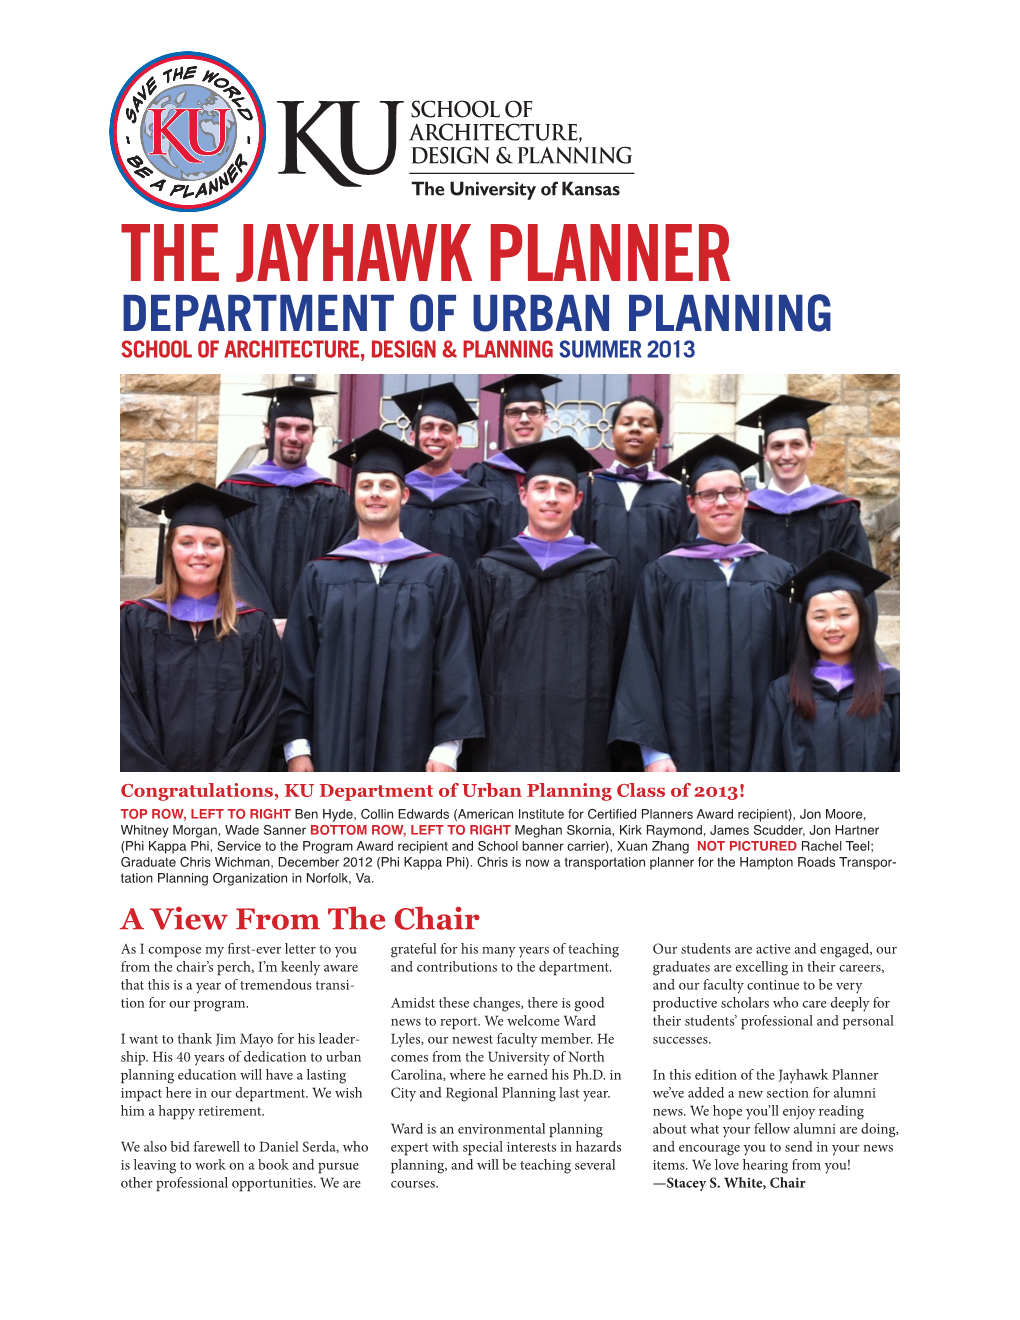 The Jayhawk Planner Department of Urban Planning School of Architecture, Design & Planning Summer 2013